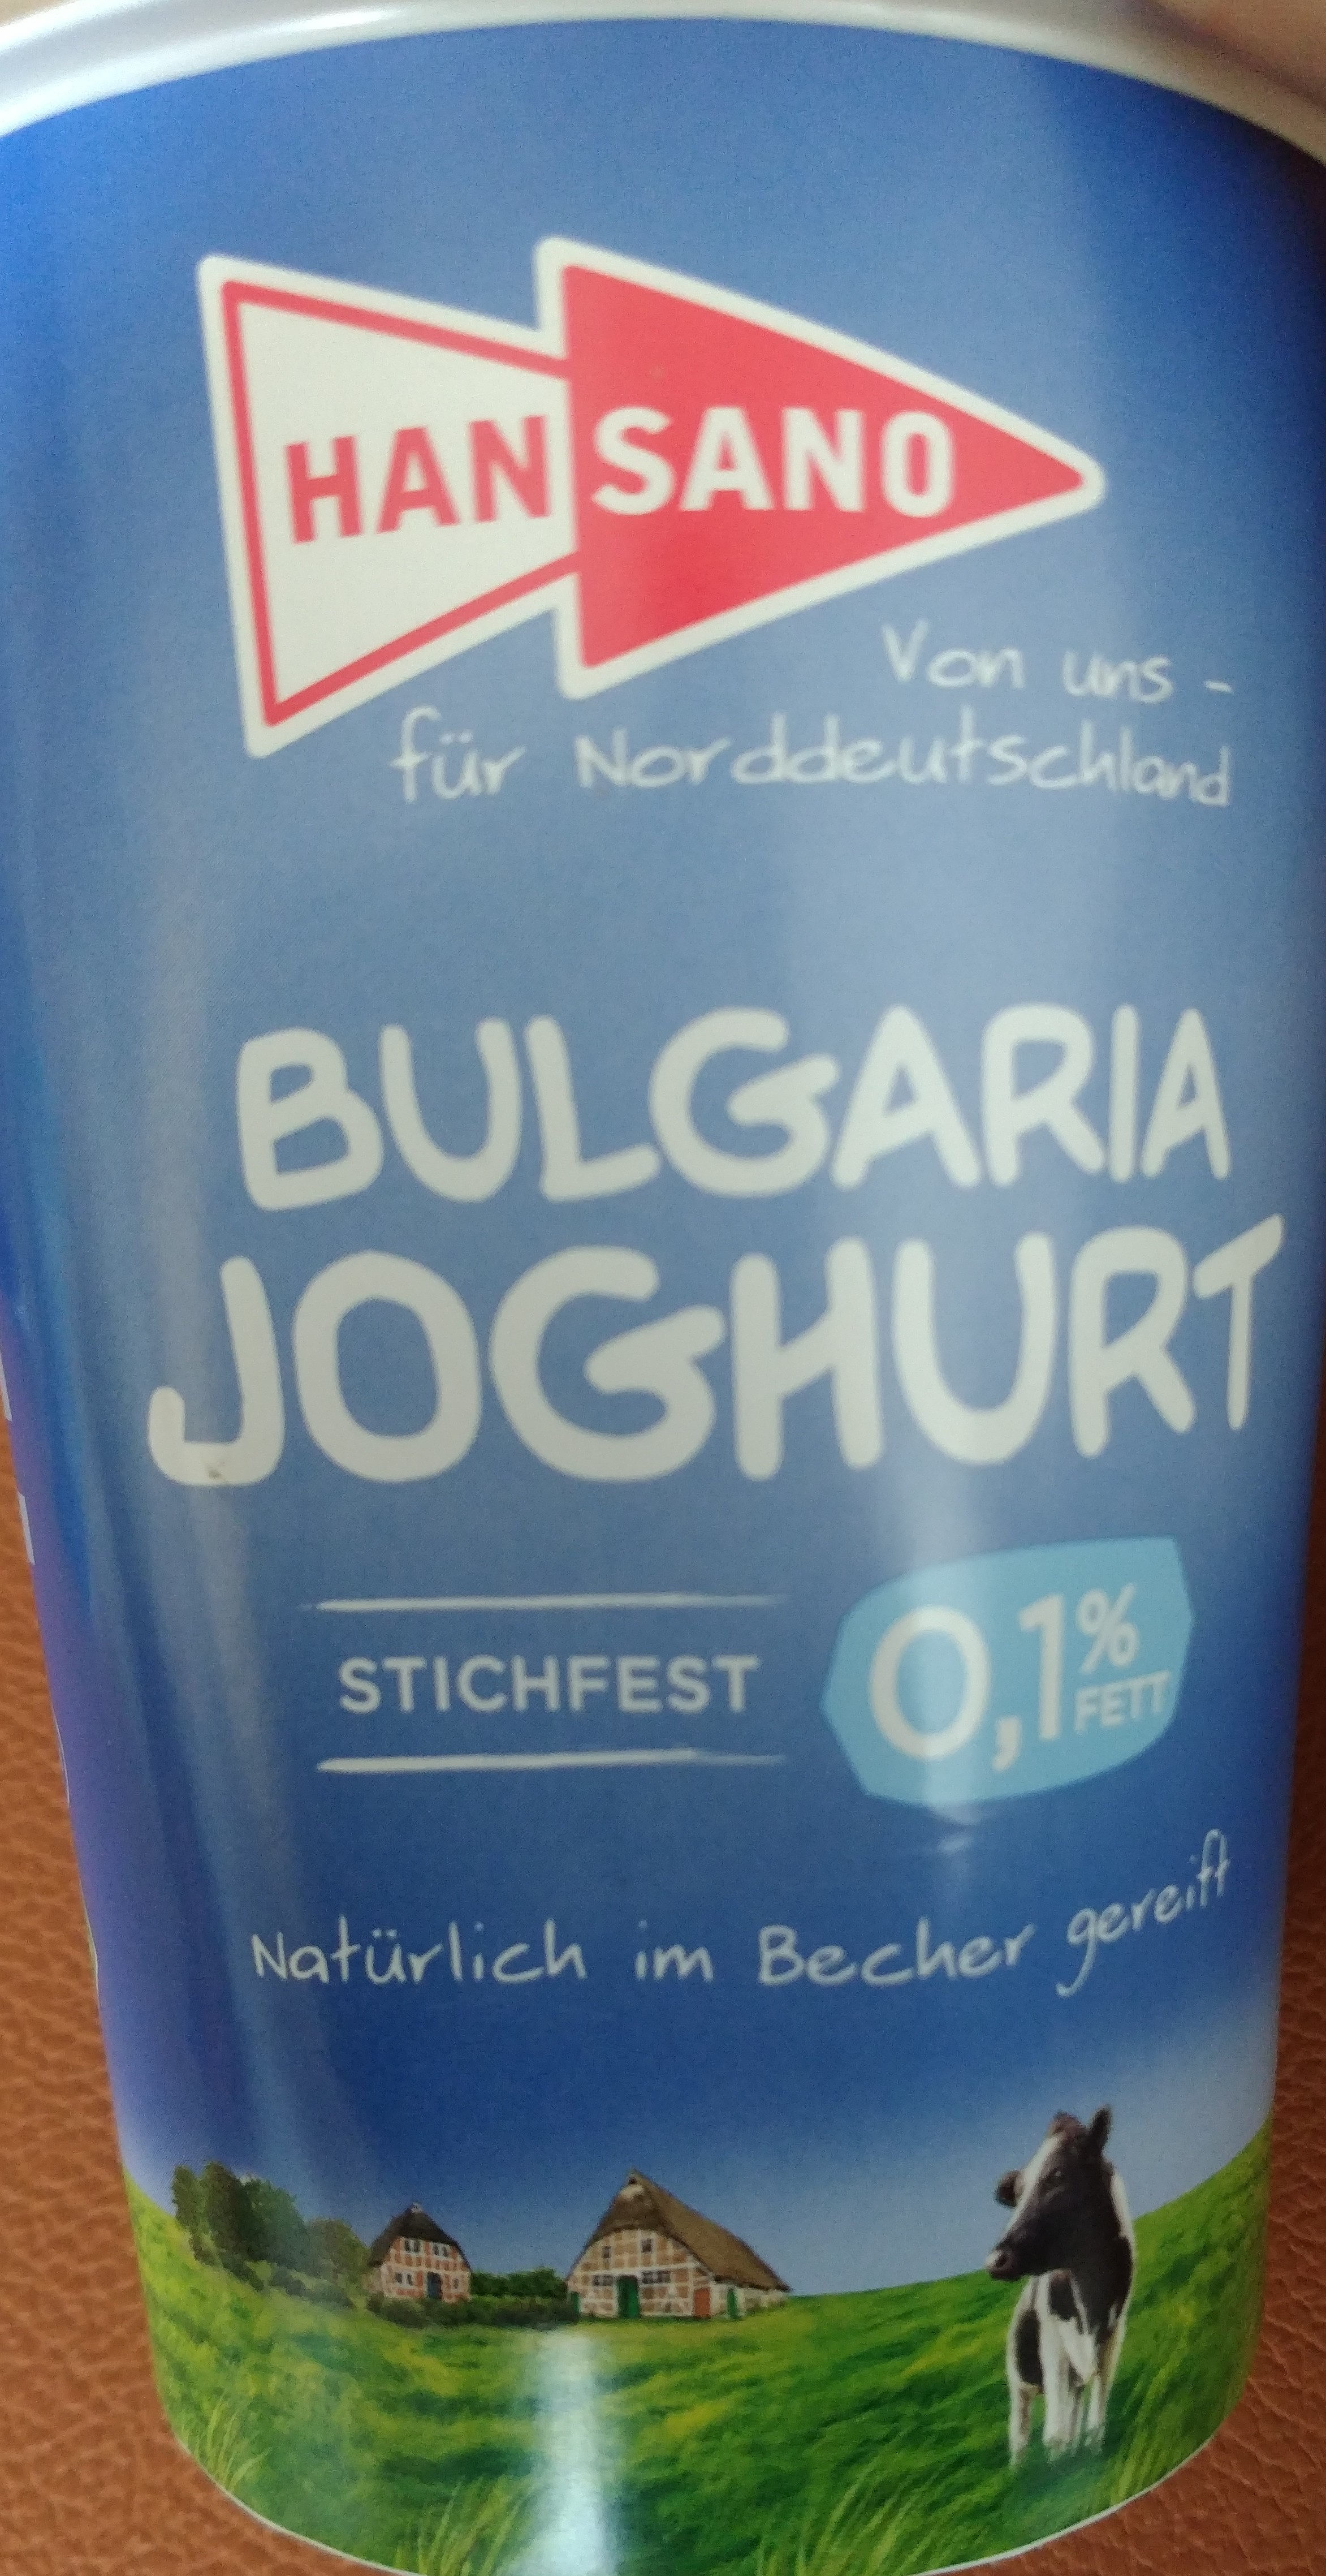 Bulgaria Joghurt - Product - de